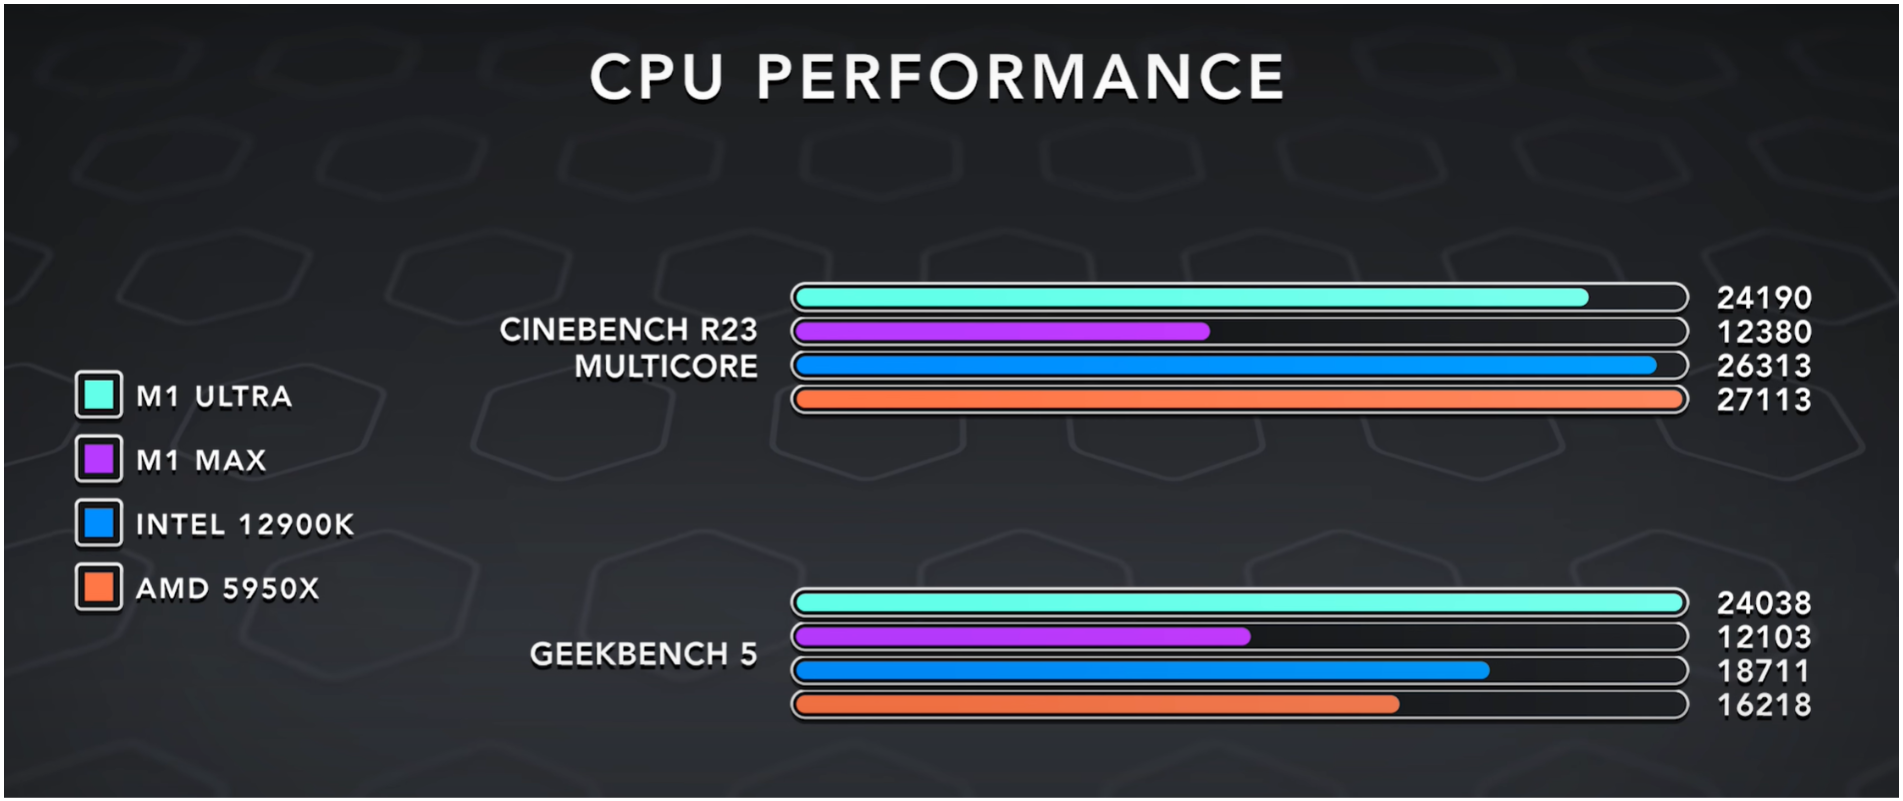 M1 UItra/Max, Intel 12900K, AMD 5950X CPU Performance